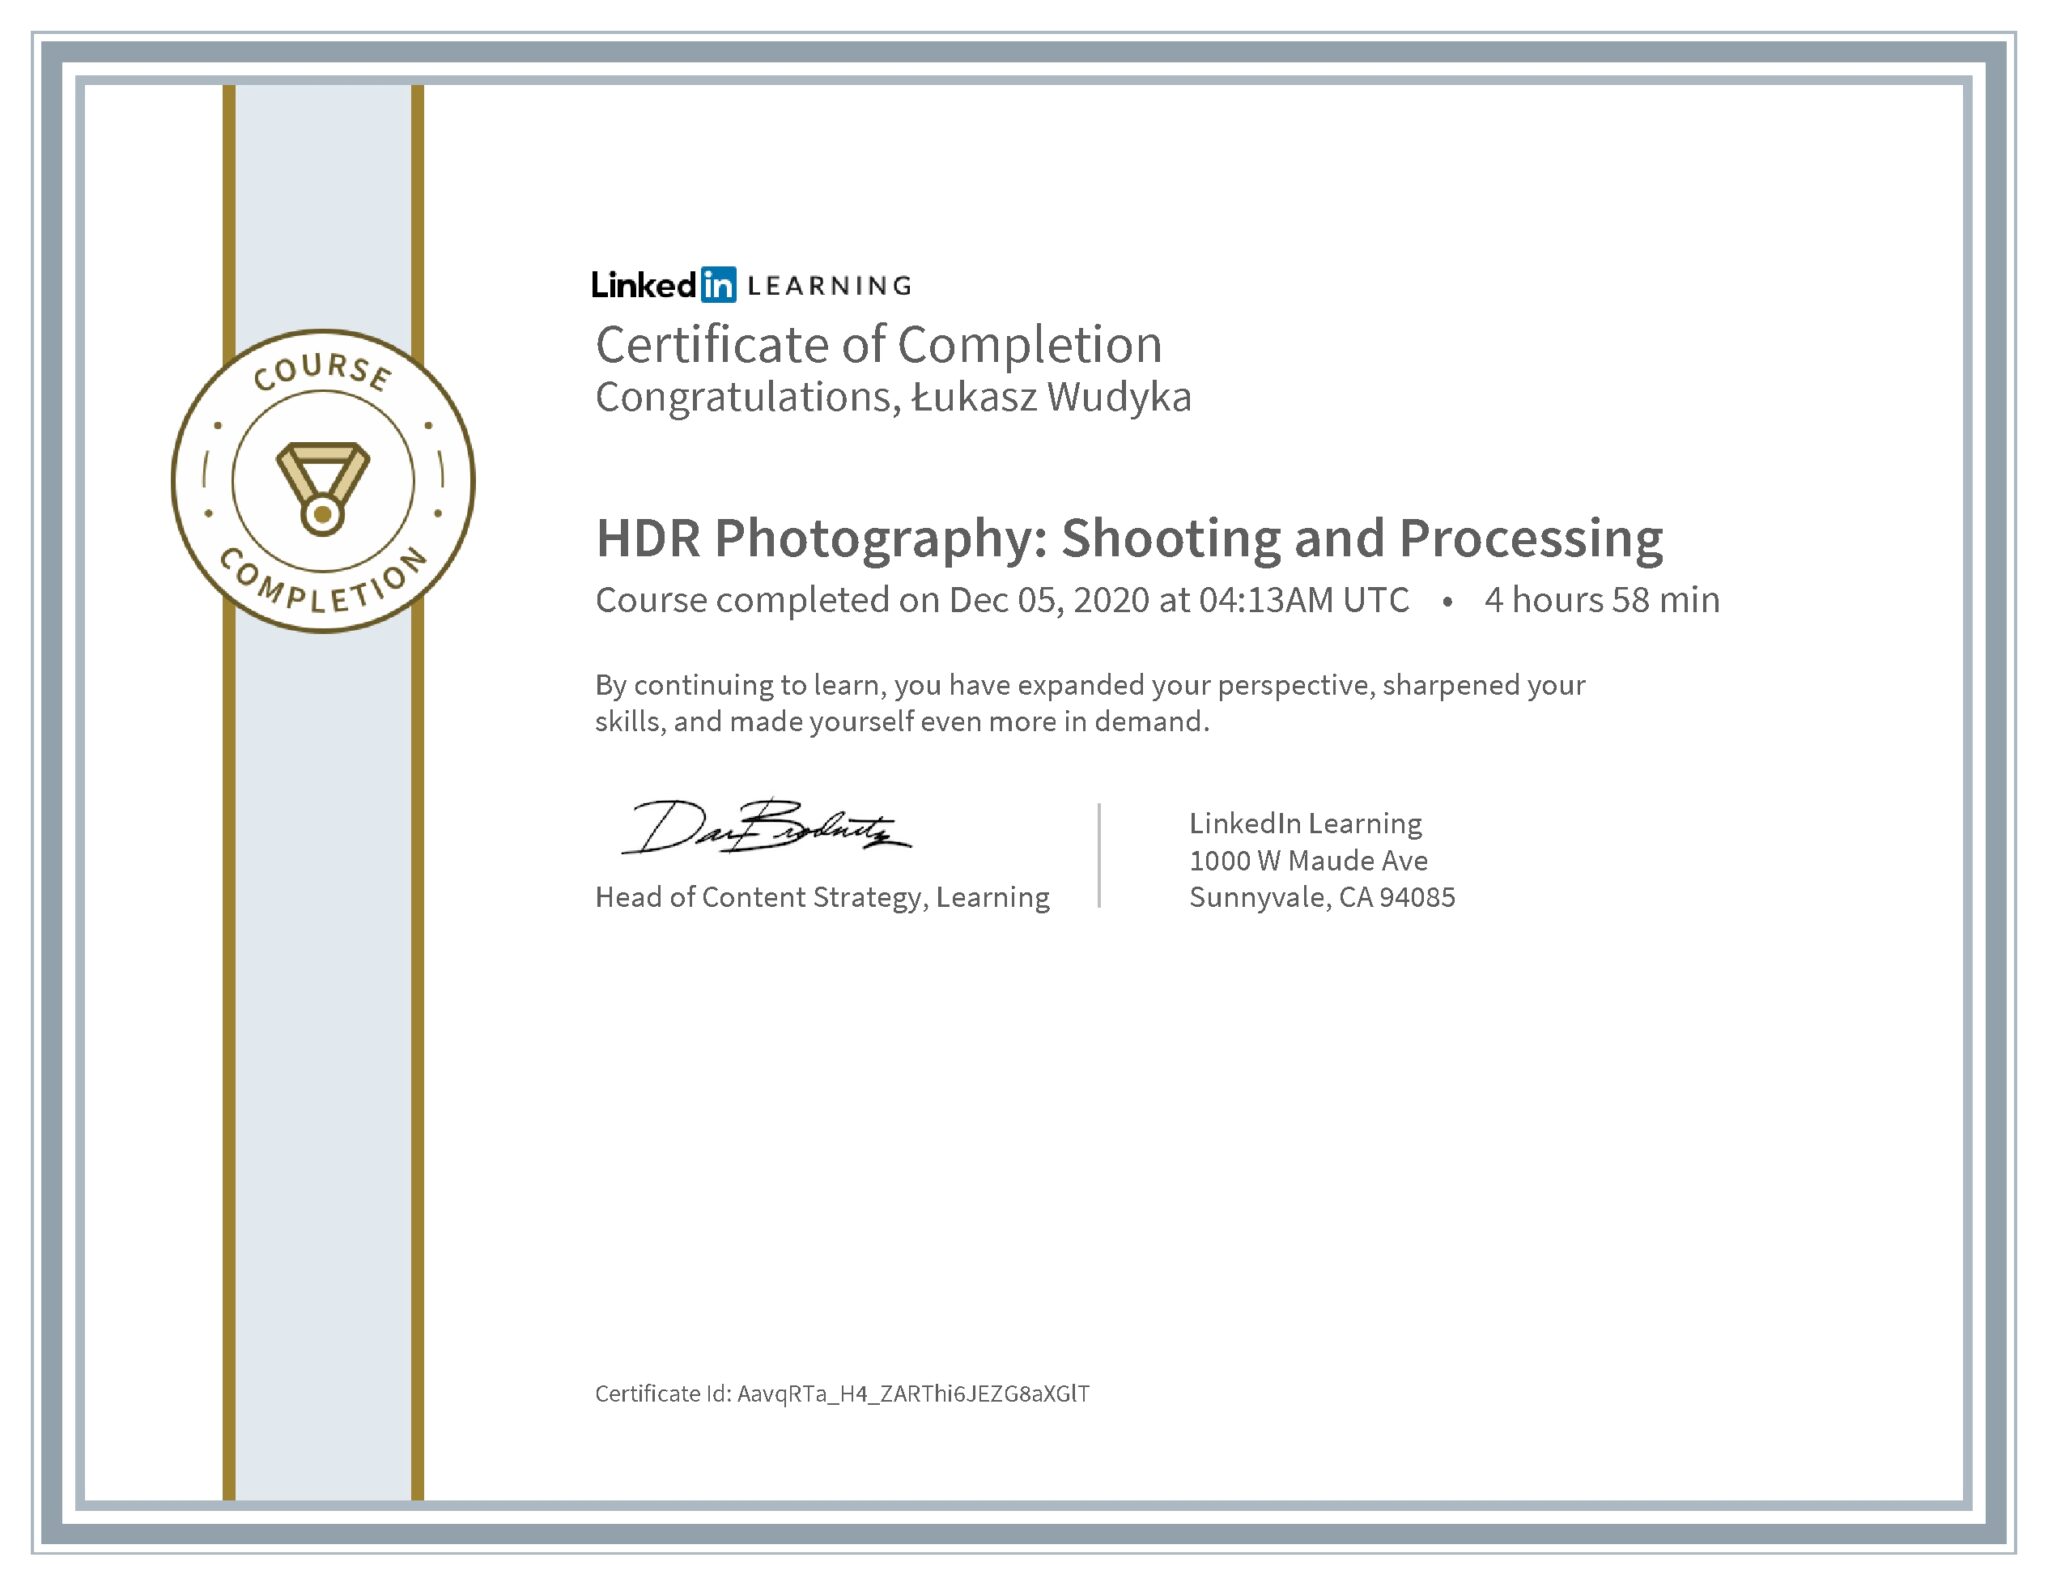 Łukasz Wudyka certyfikat LinkedIn HDR Photography: Shooting and Processing